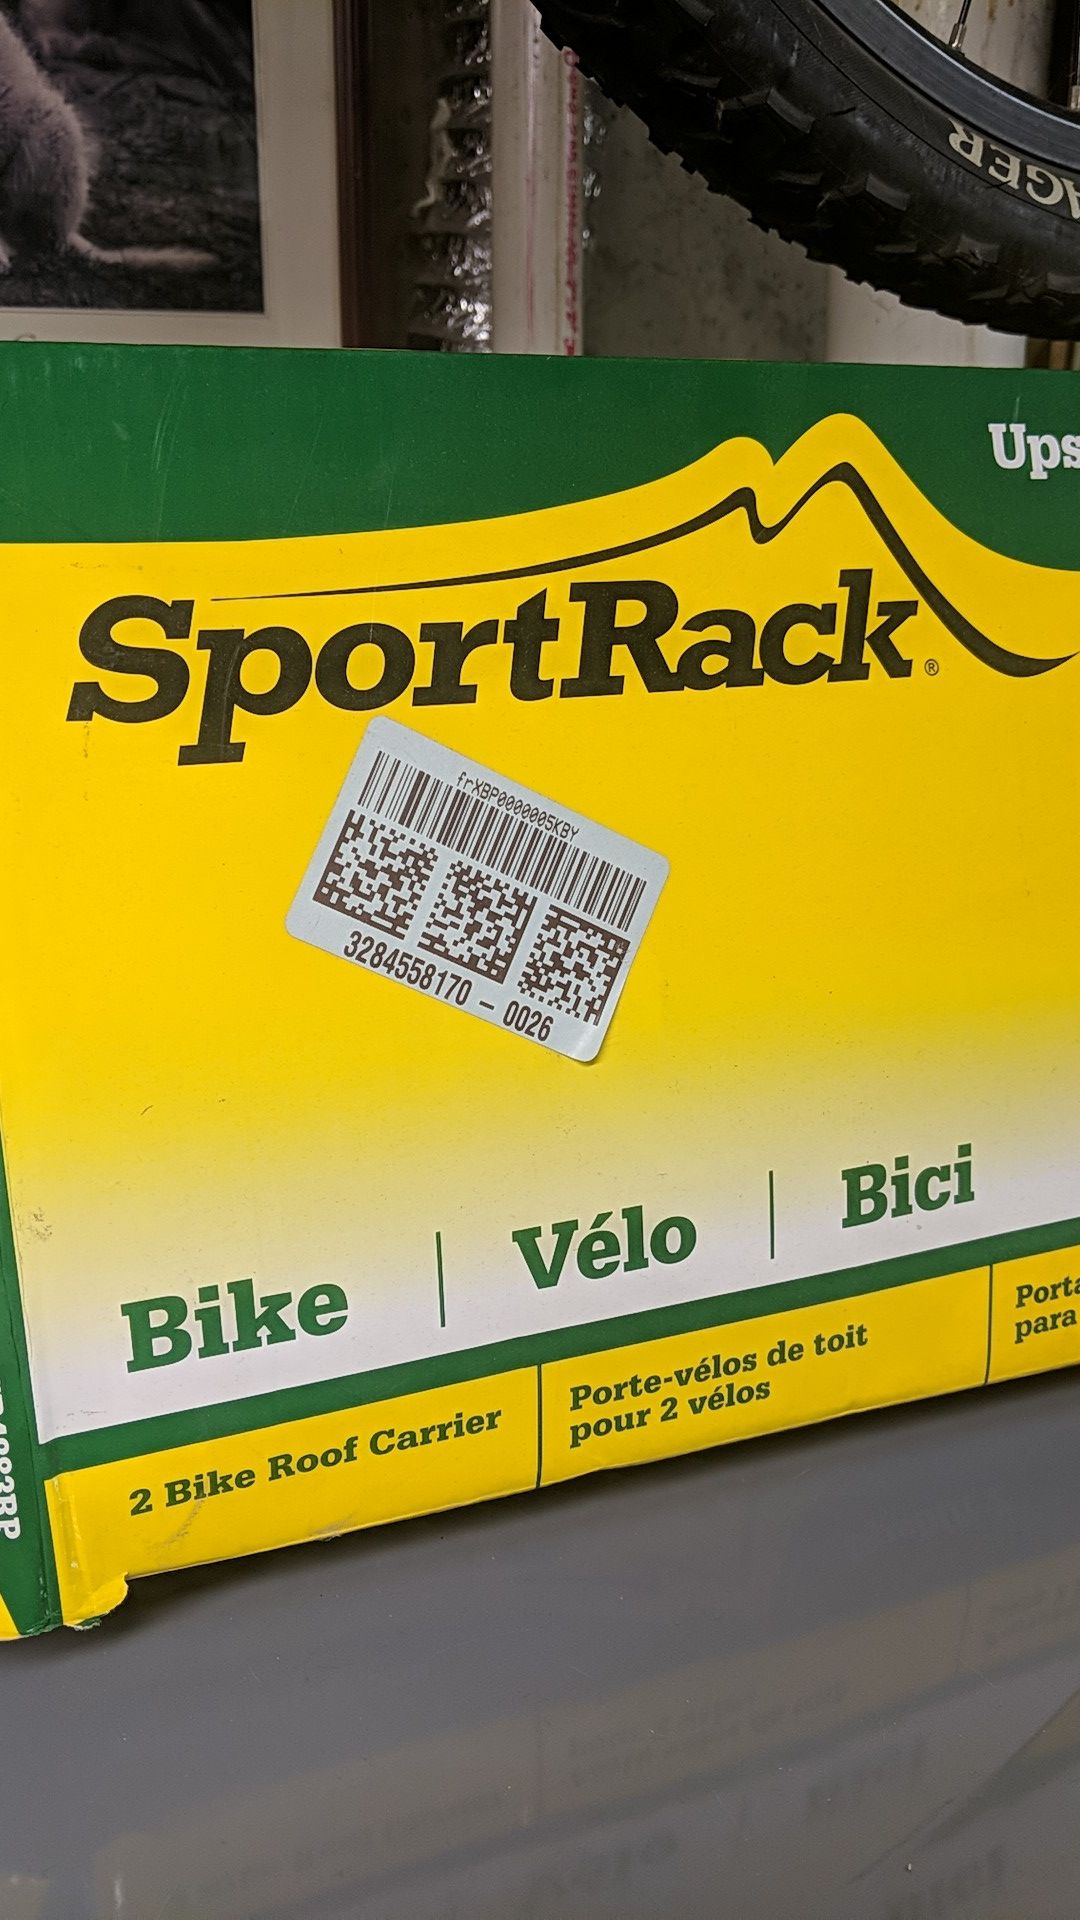 Sport rack - Upshift 2